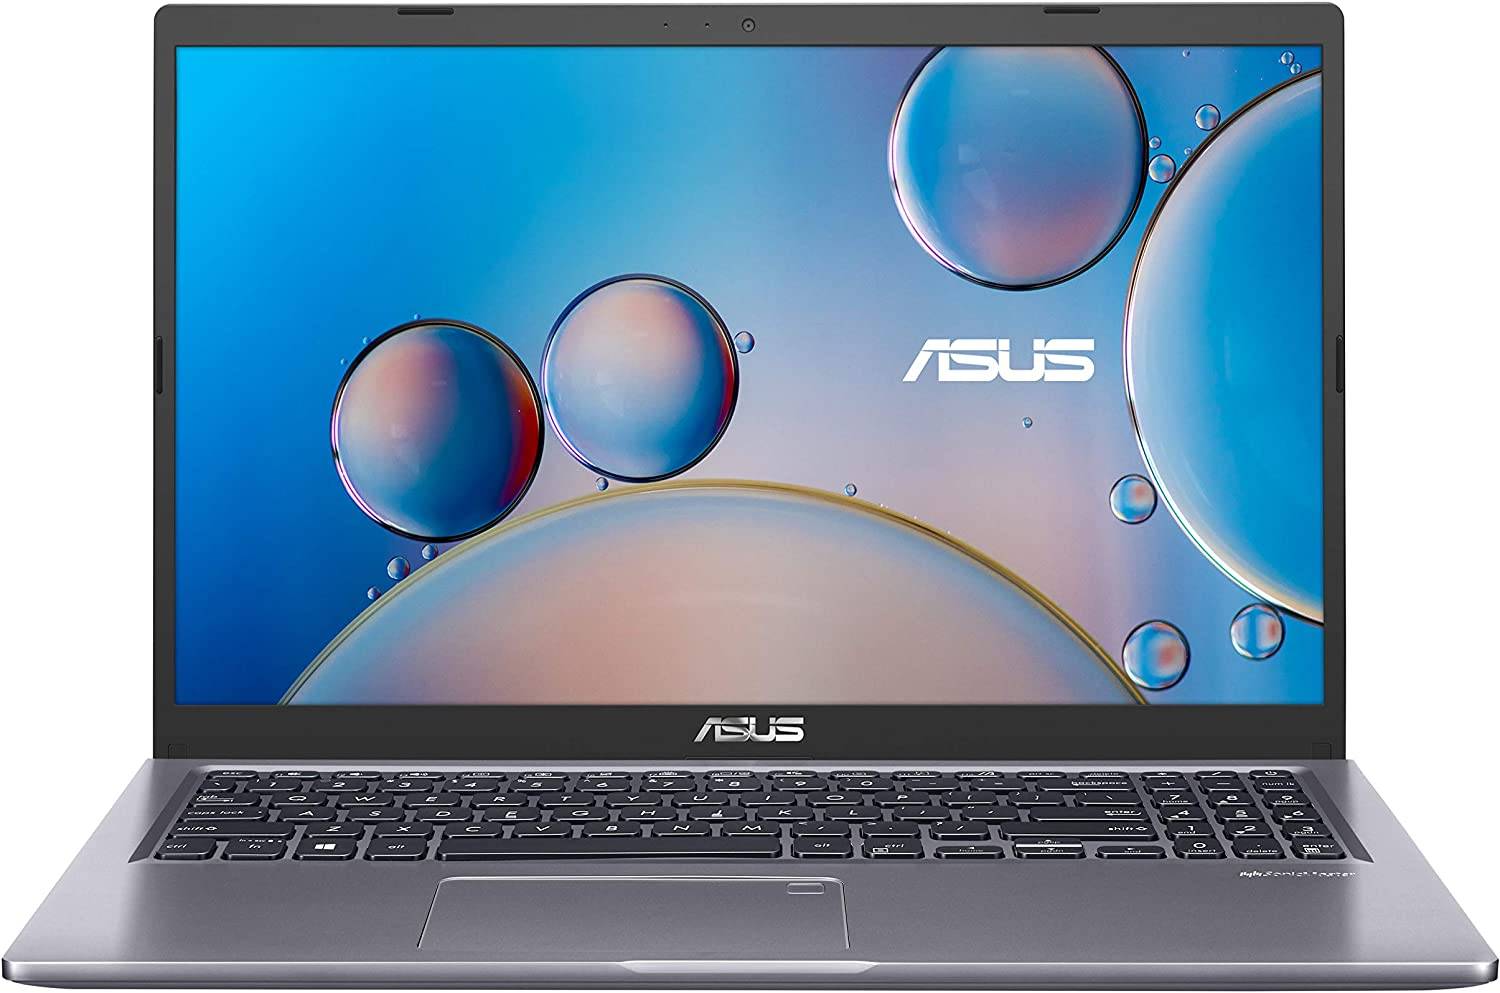 ASUS VivoBook S14 14 FHD Laptop, Intel Core i5-1135G7, 8GB RAM, 512GB SSD,  Windows 10 Home/Windows, Light Gray, S433EA-DH51